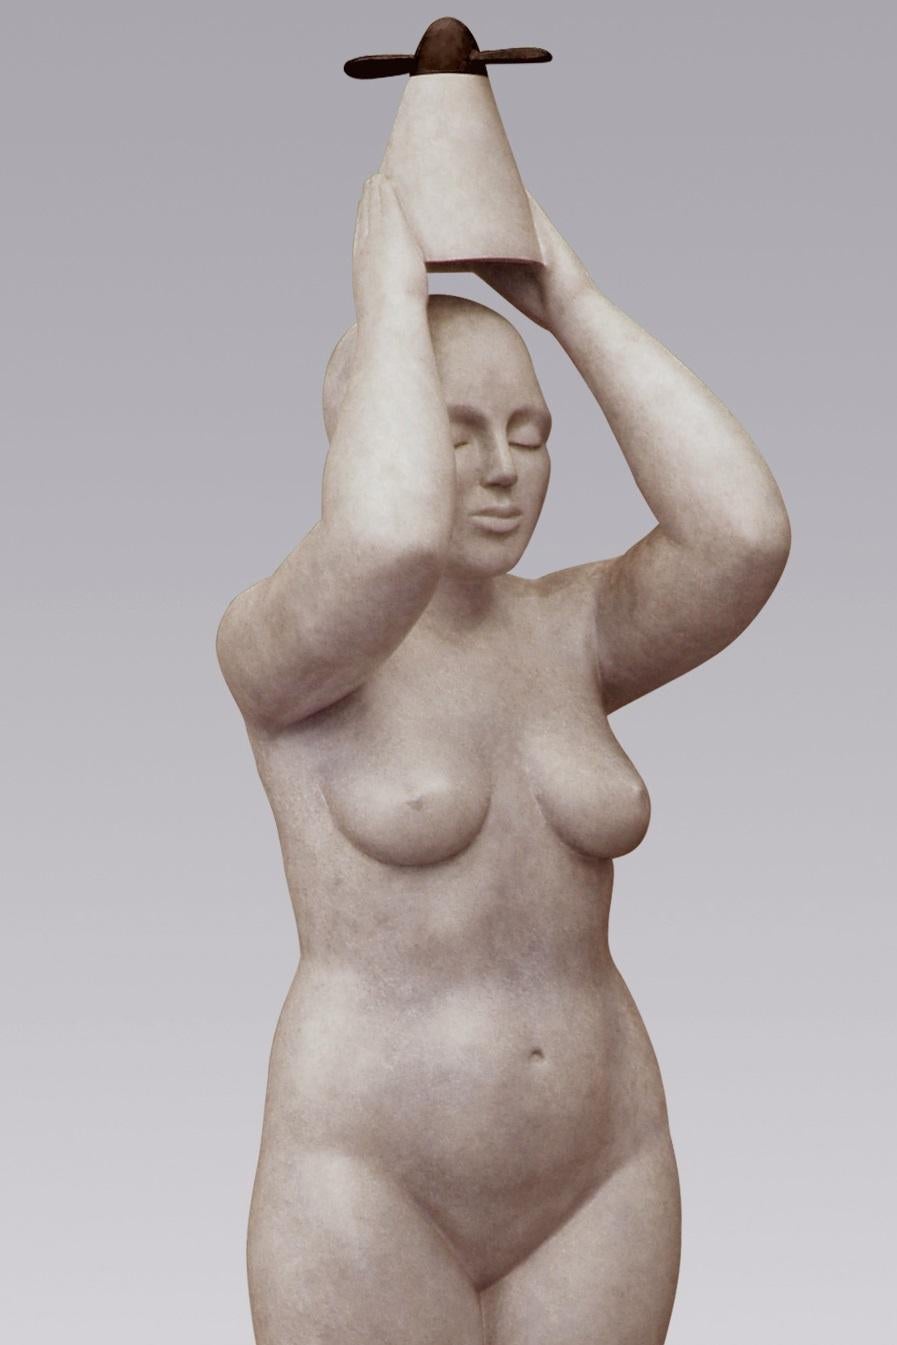 Engel Angel Sculpture en bronze d'un ange nu féminin Femme Contemporaine - Or Nude Sculpture par Erwin Meijer